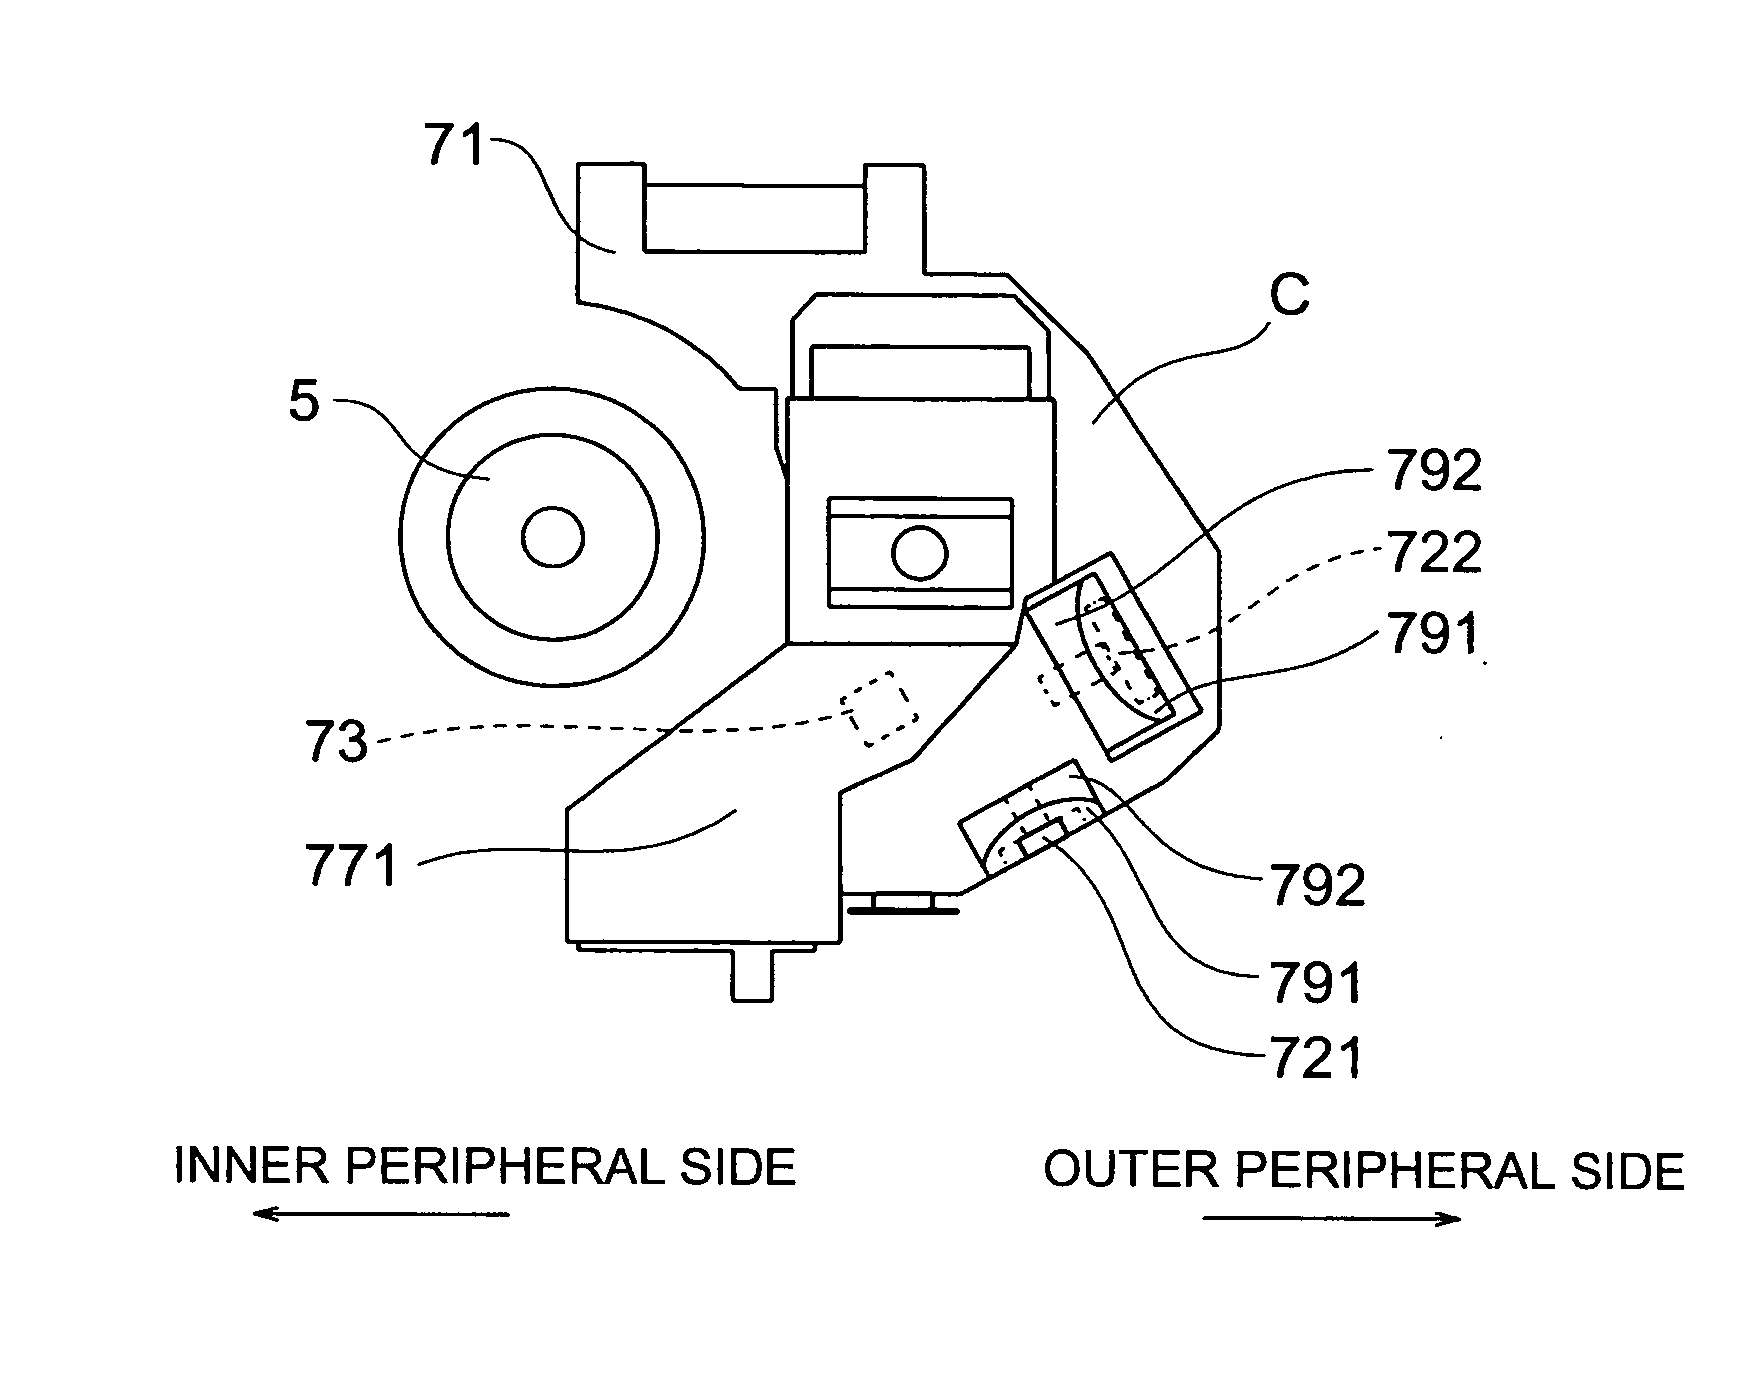 Optical pickup apparatus